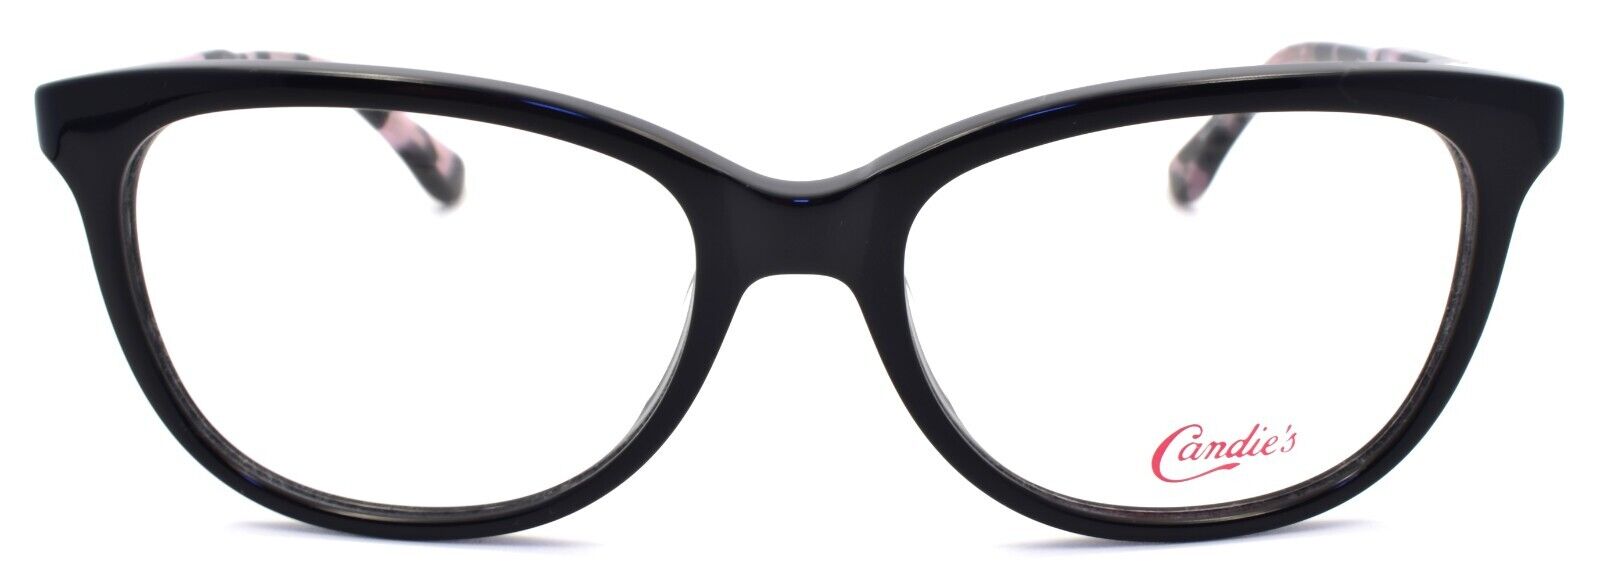 2-Candies CA0508 001 Women's Eyeglasses Frames Cat Eye 51-16-135 Black-664689933358-IKSpecs